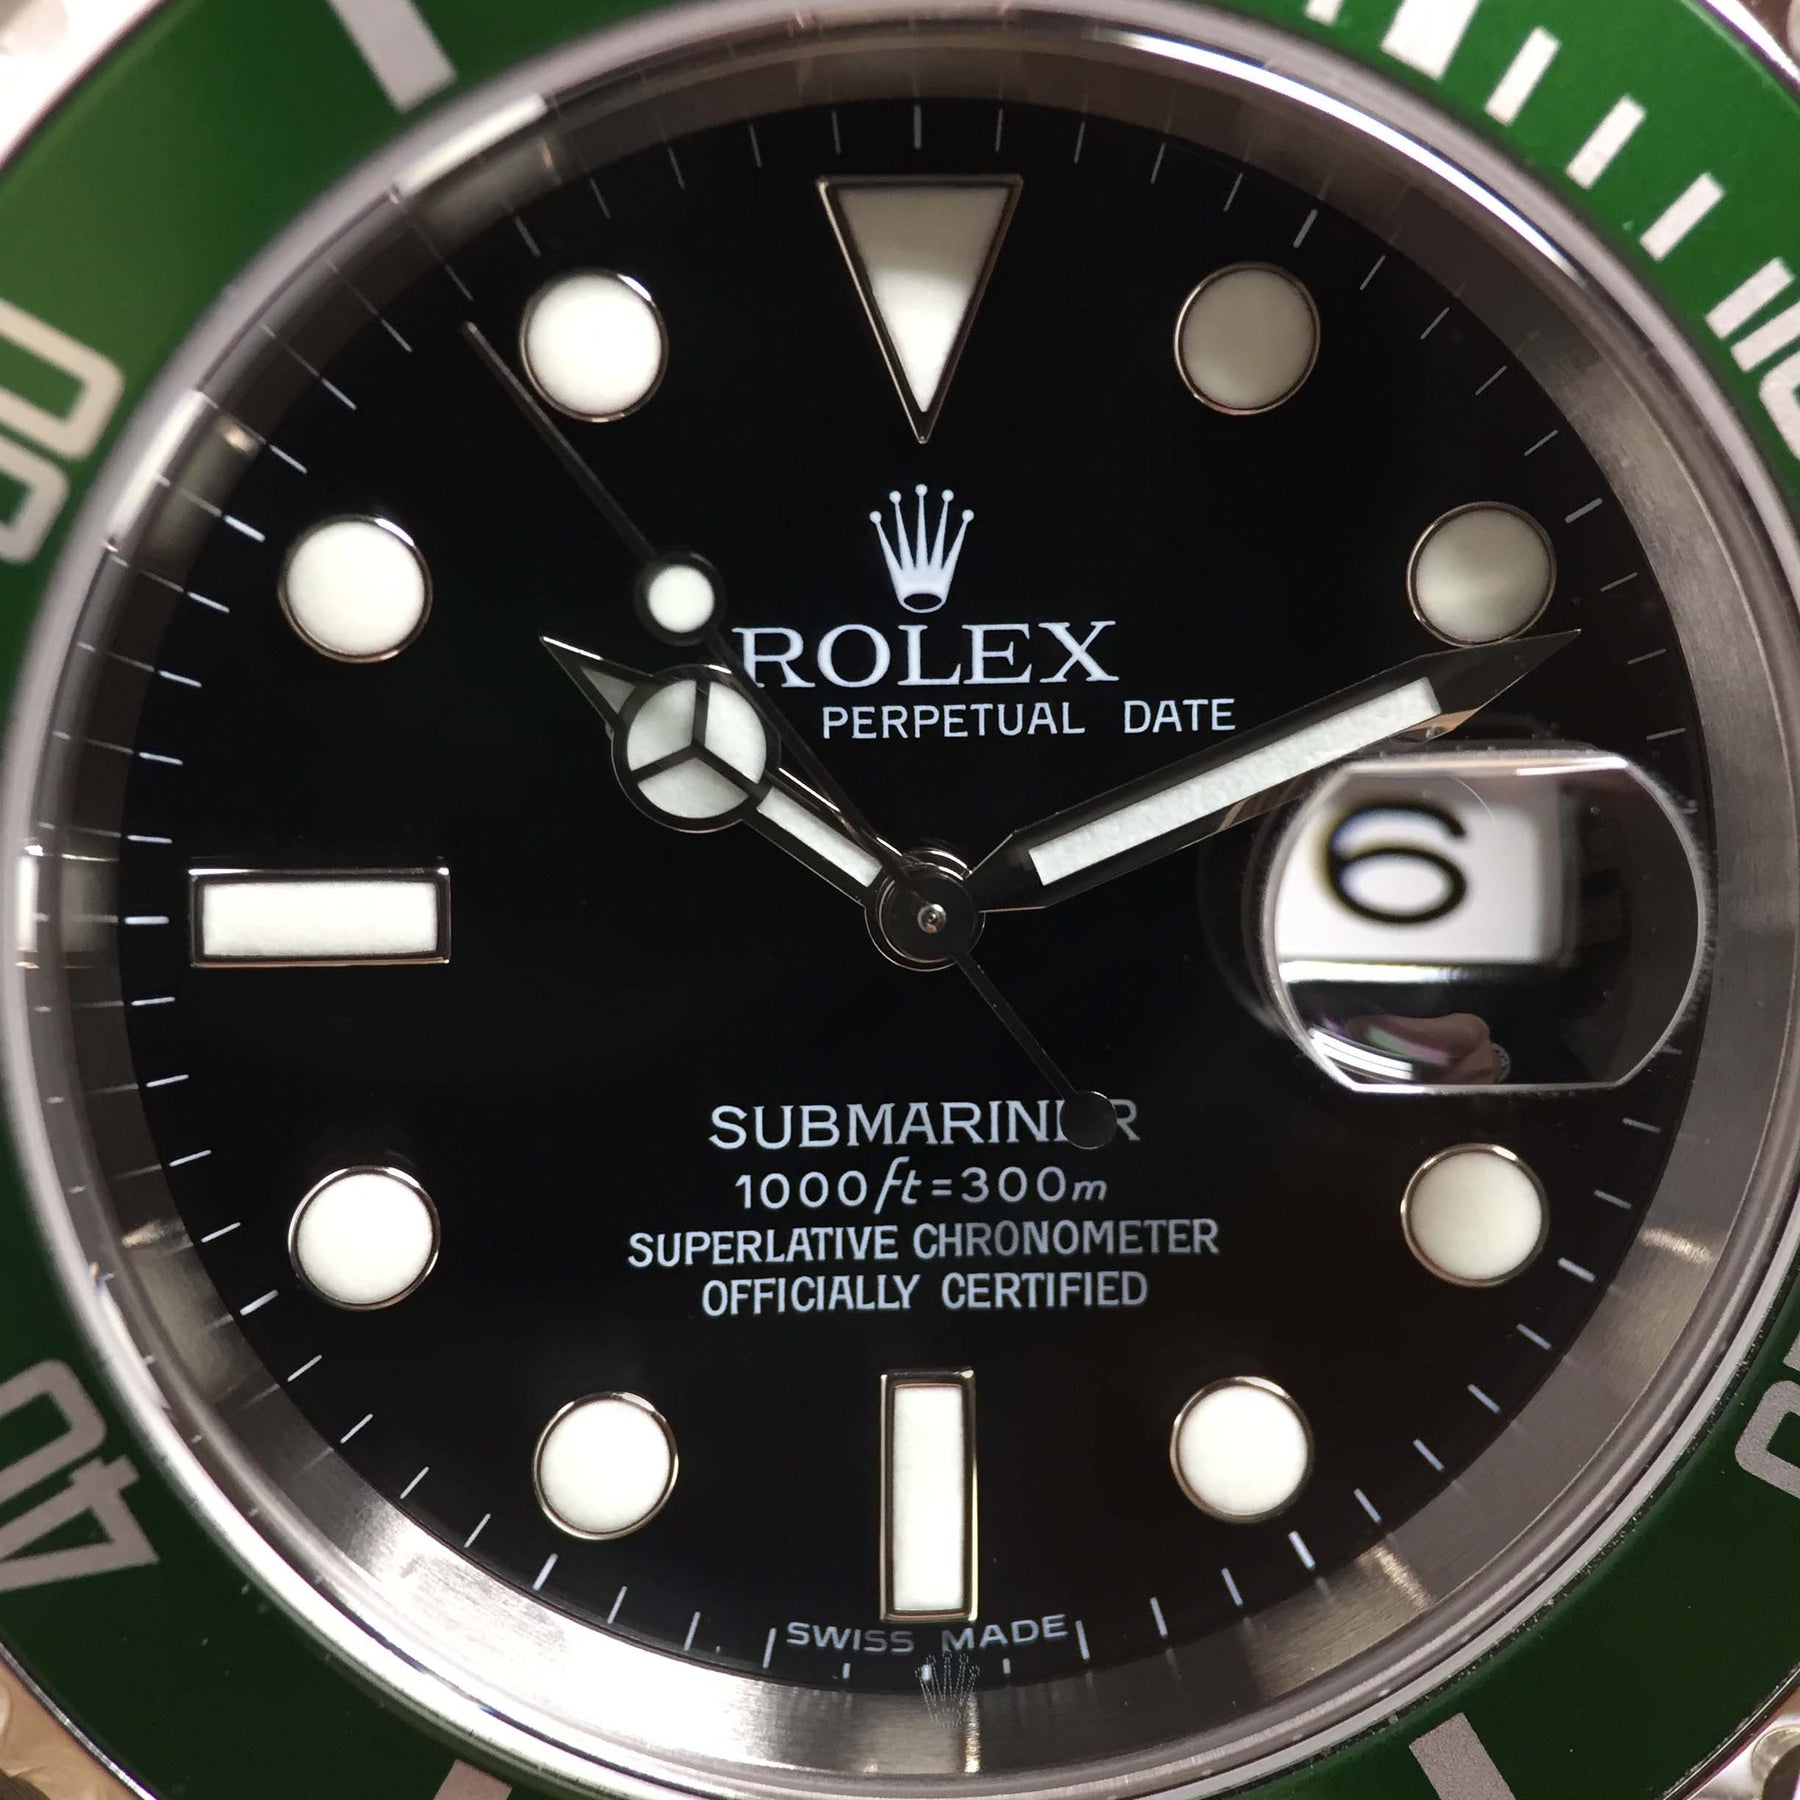 Rolex Submariner Anniversary NOS Ref. 16610LV Year 2006 (Full Set)